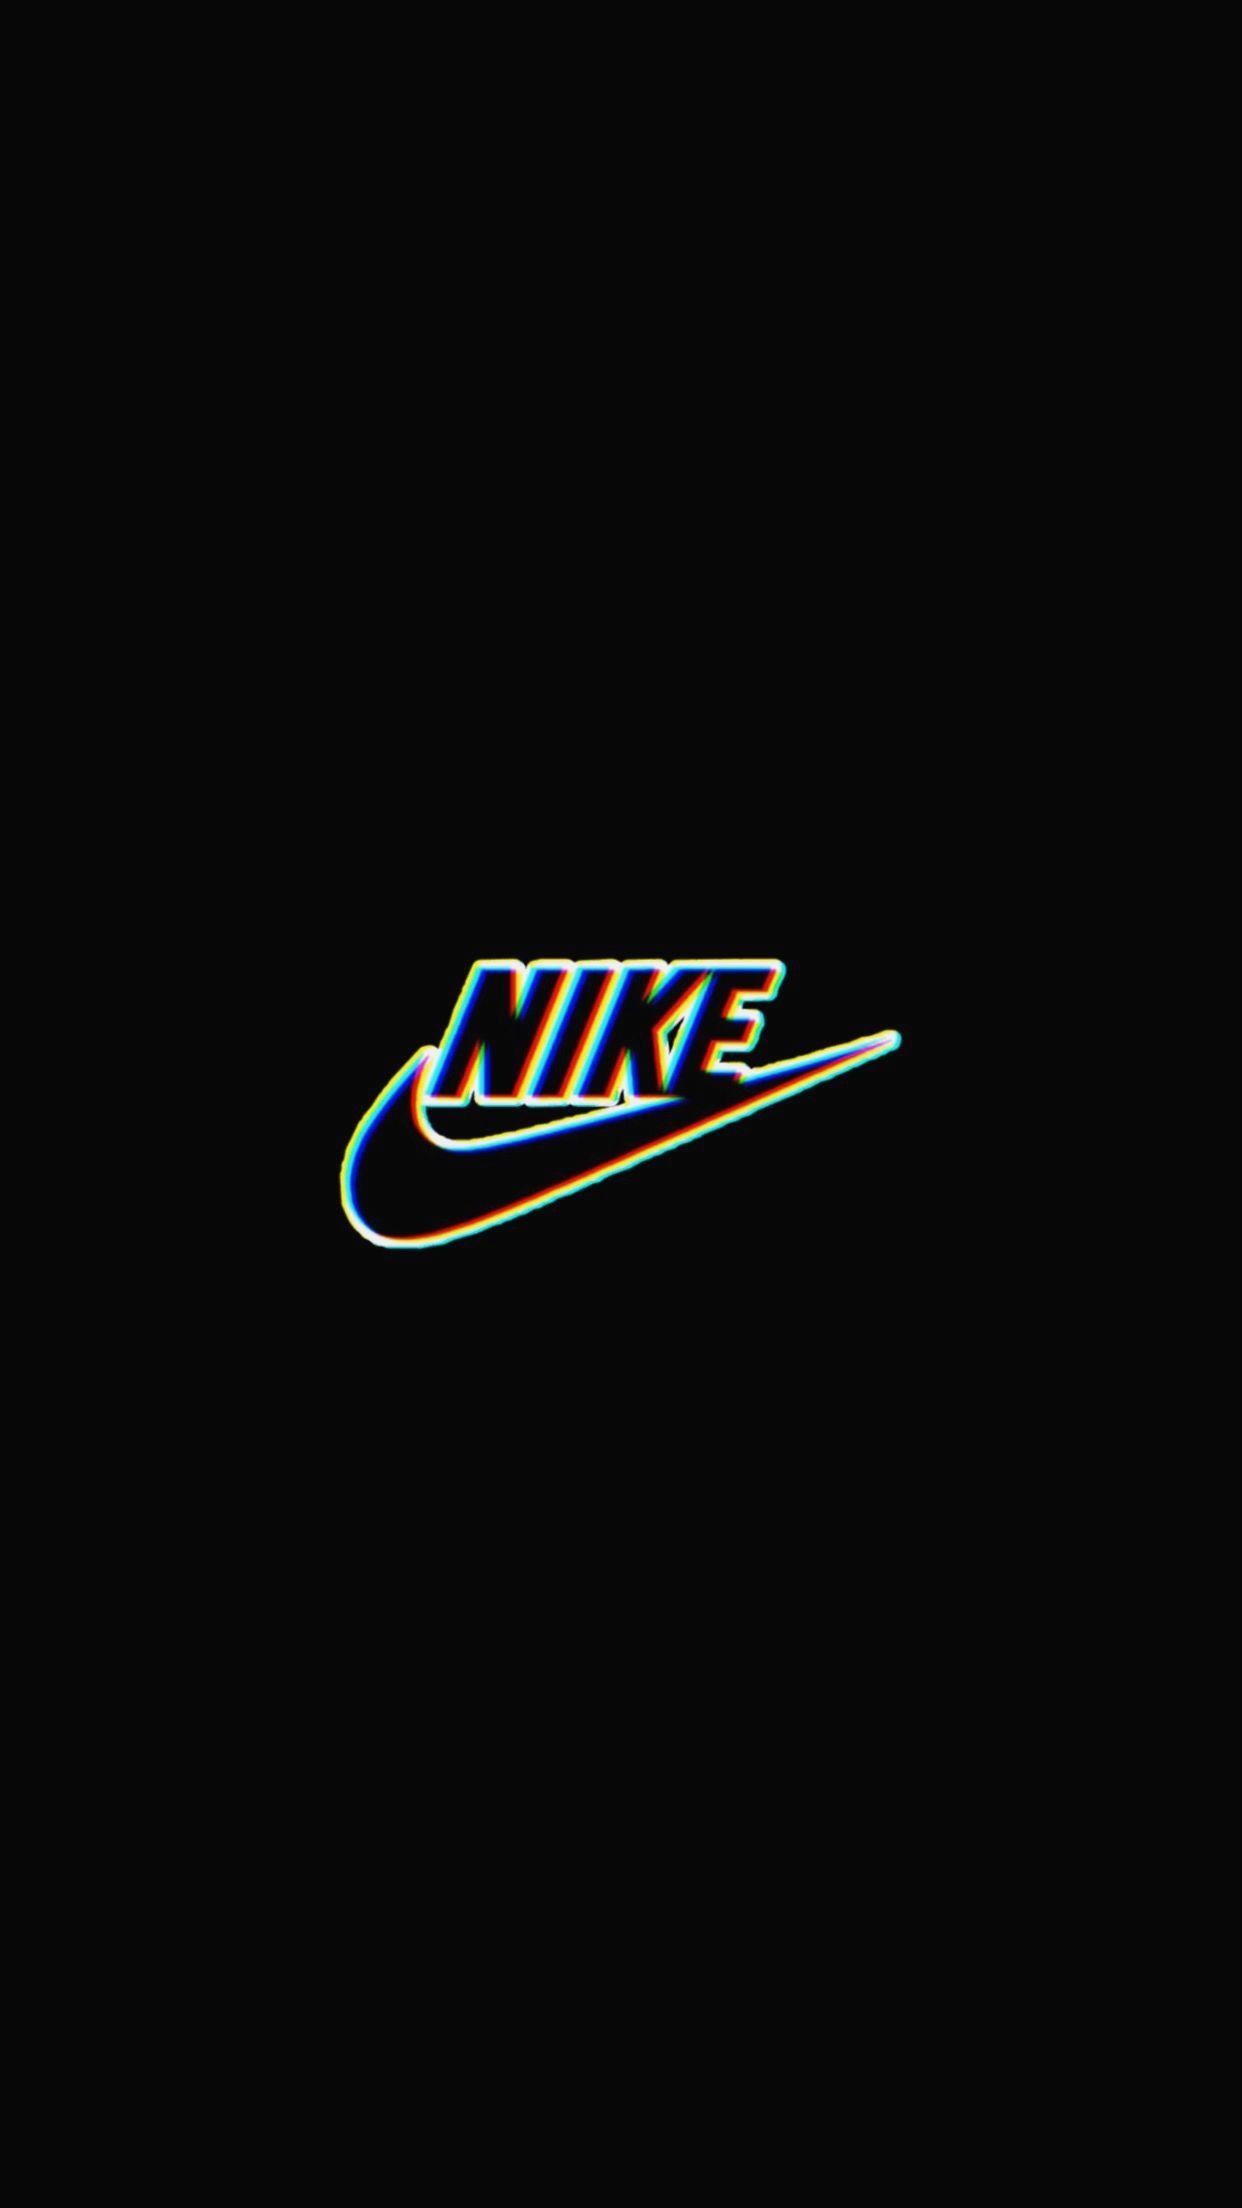 The nike logo in a dark background - 3D